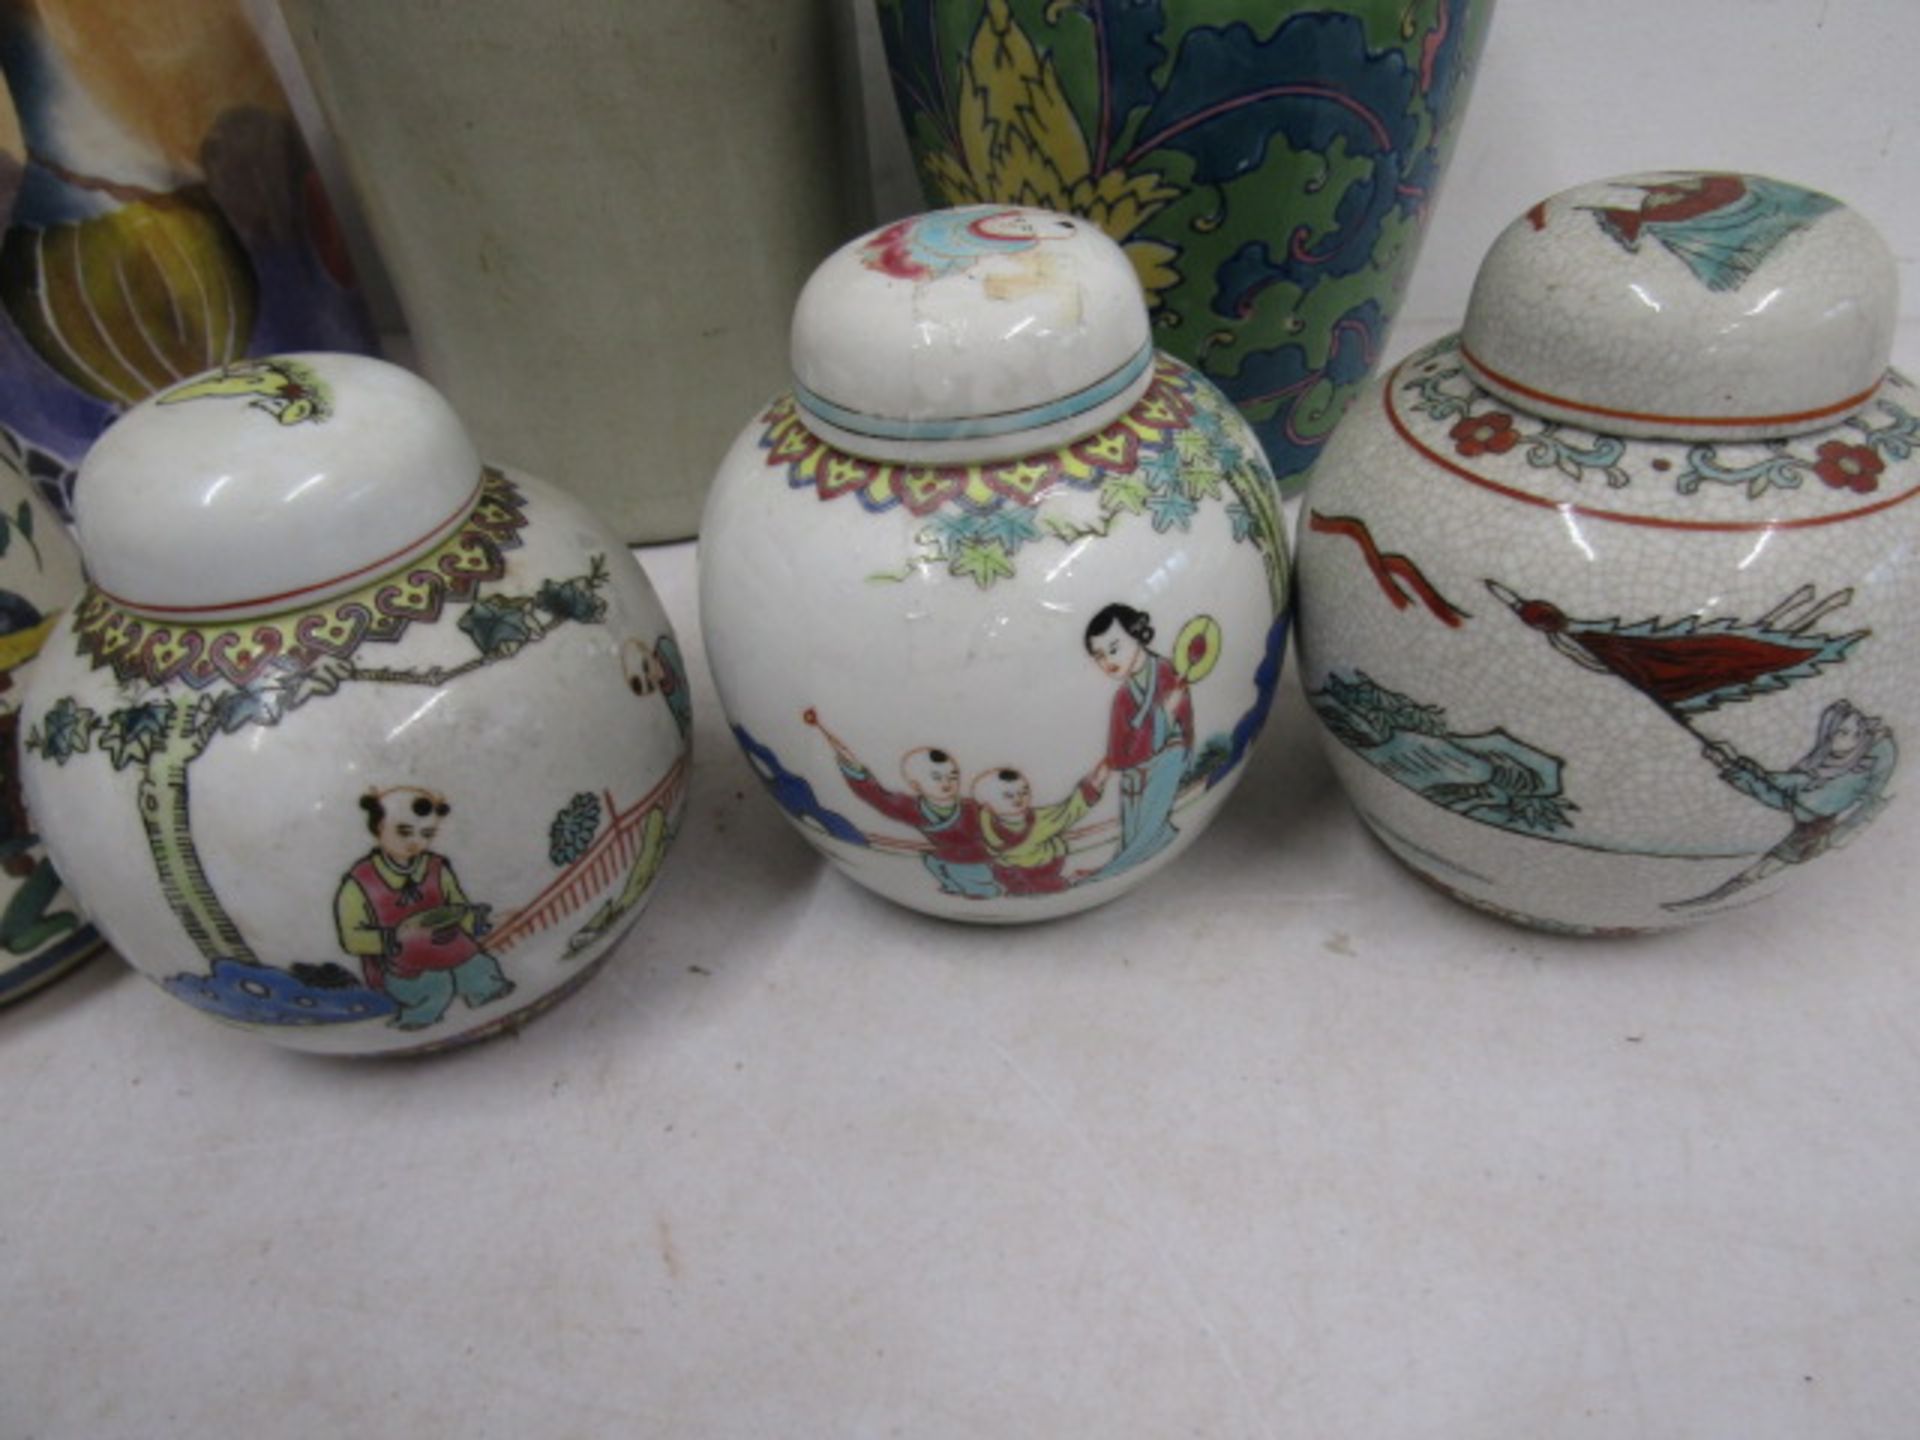 Palestine mug Chinese ginger jars and various jugs/ceramics - Image 6 of 6